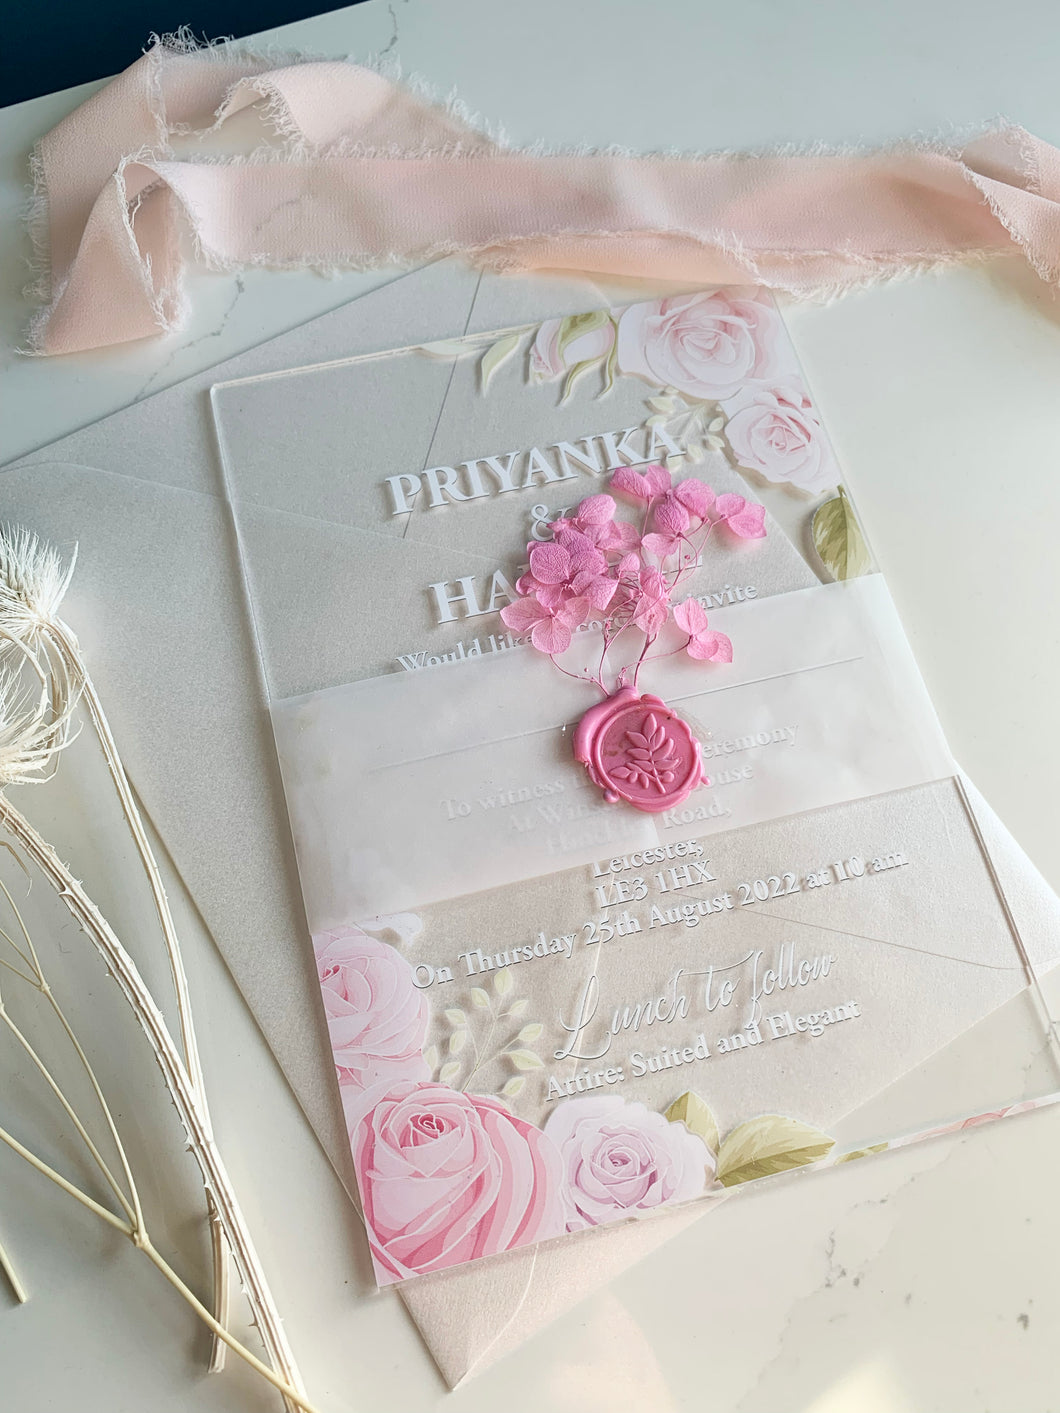 Personalised Acrylic Wedding Invitation - Pink Rose Floral Design